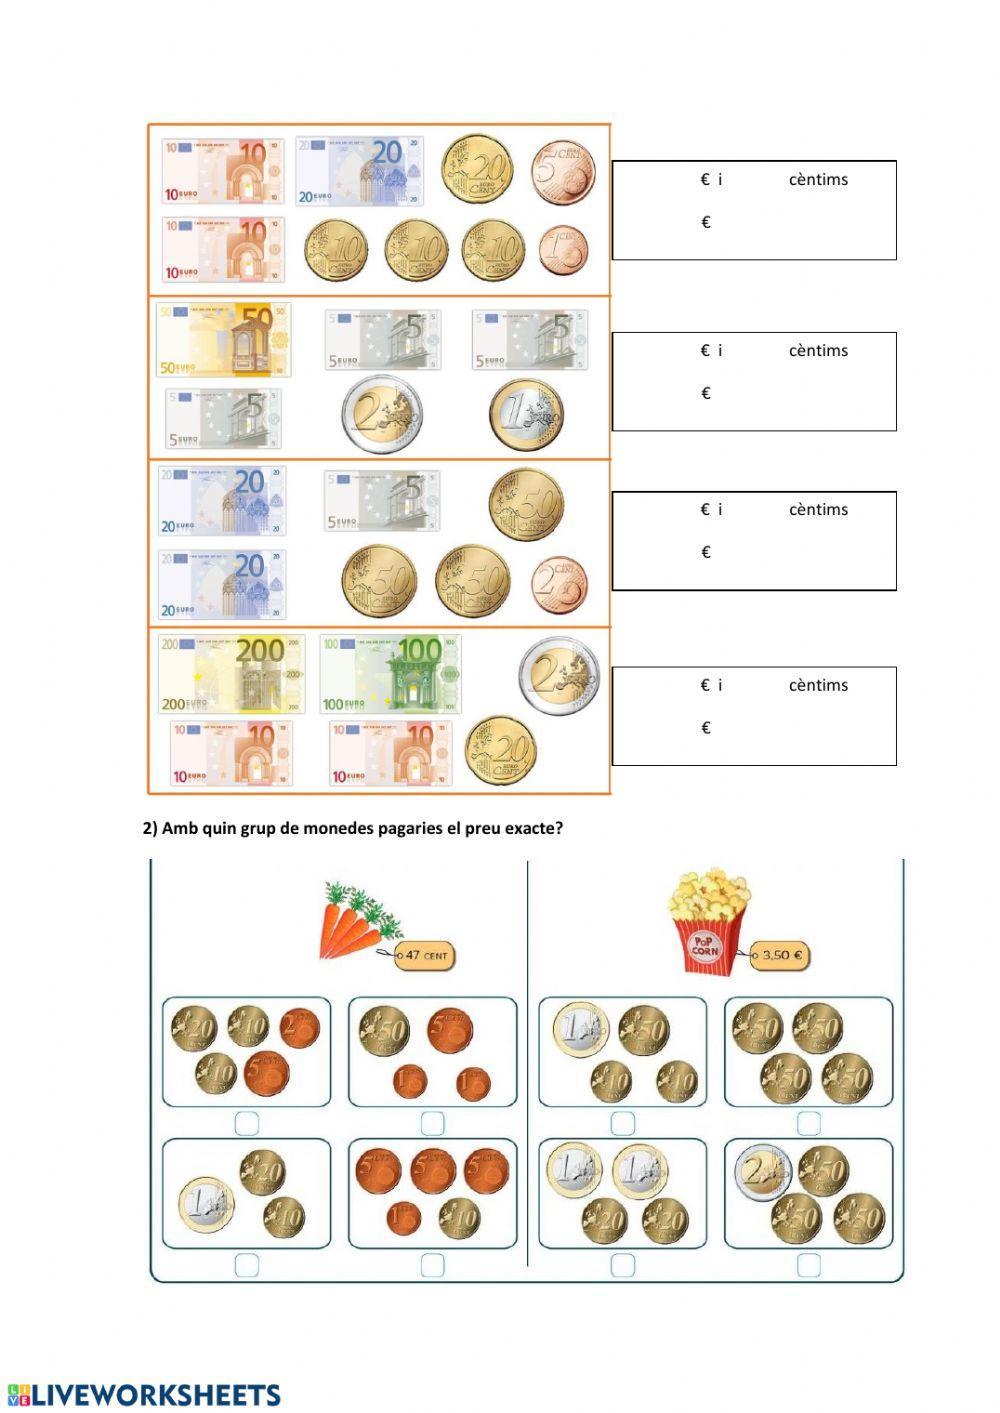 Euros i cèntims